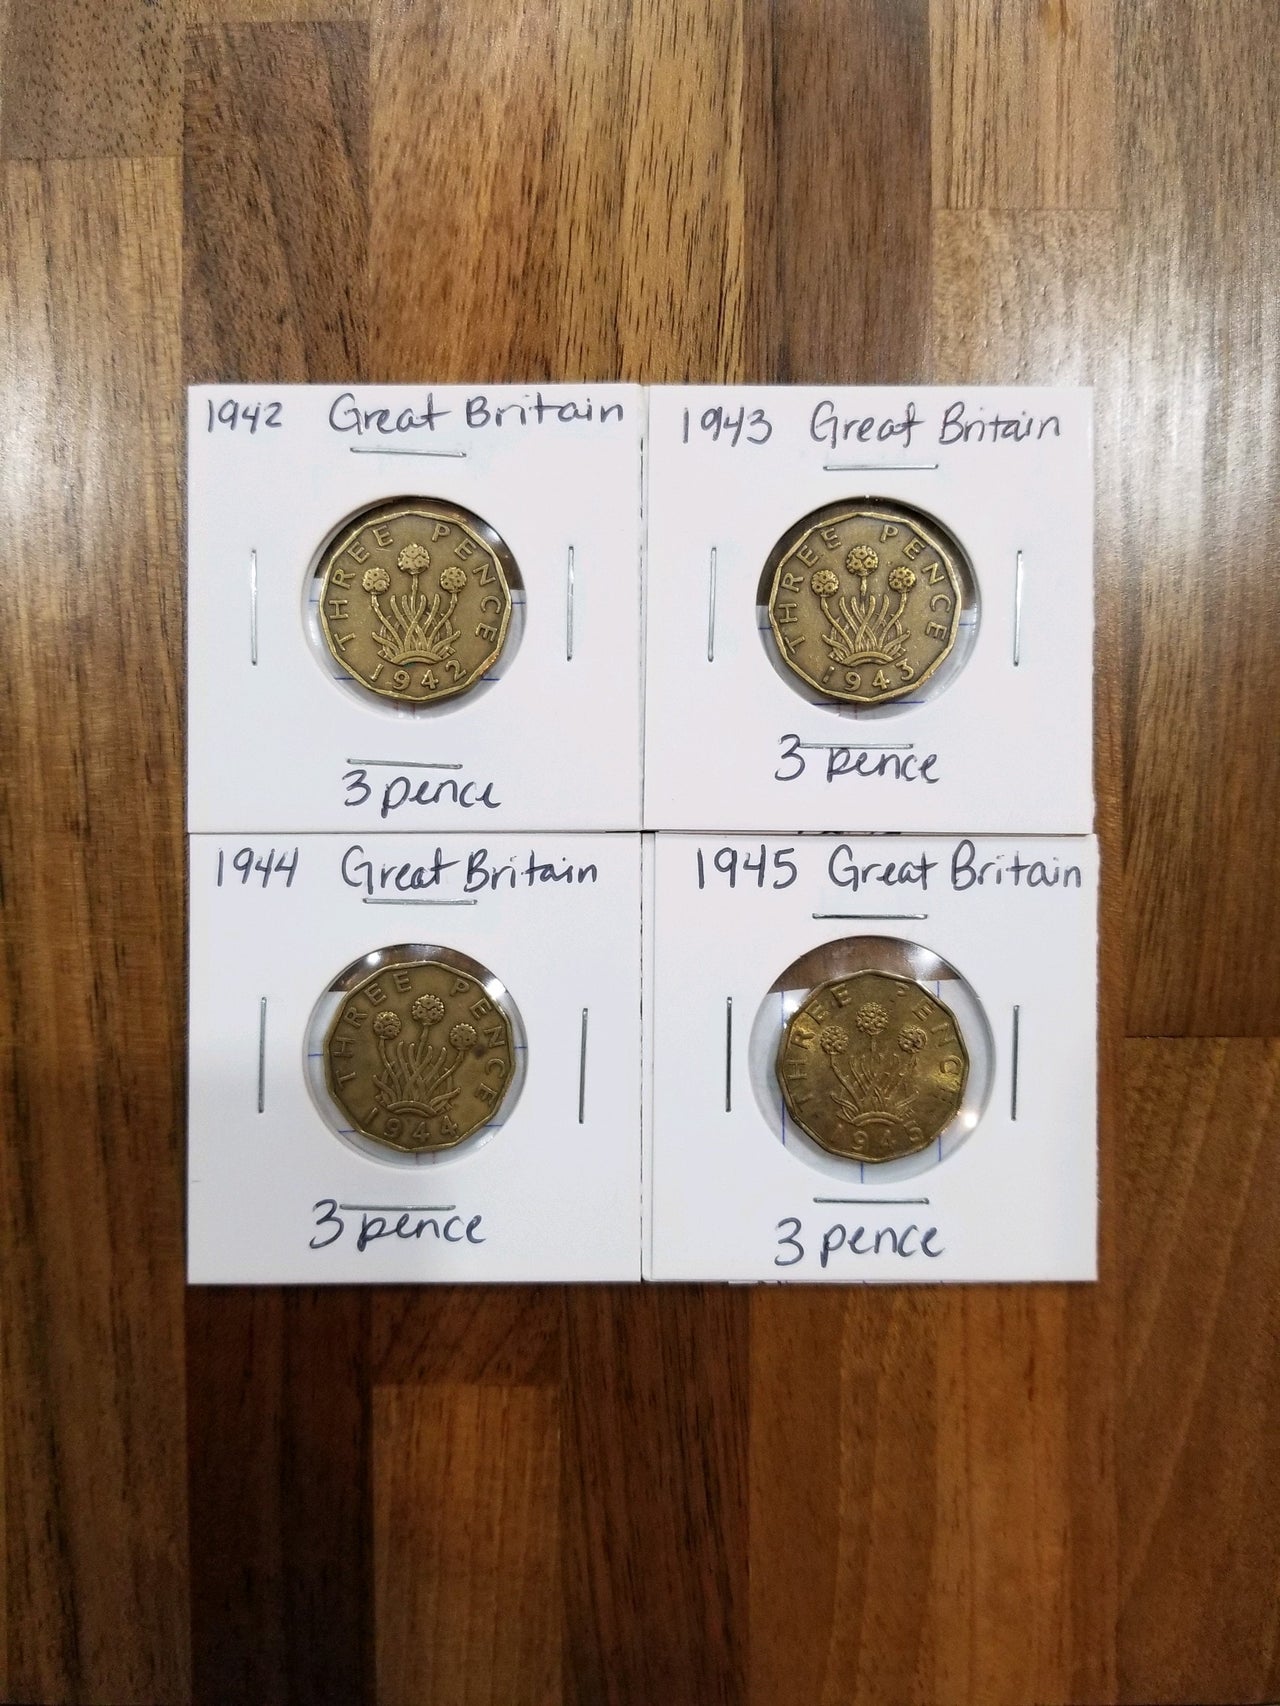 WW2 Great Britain coins 2.jpeg